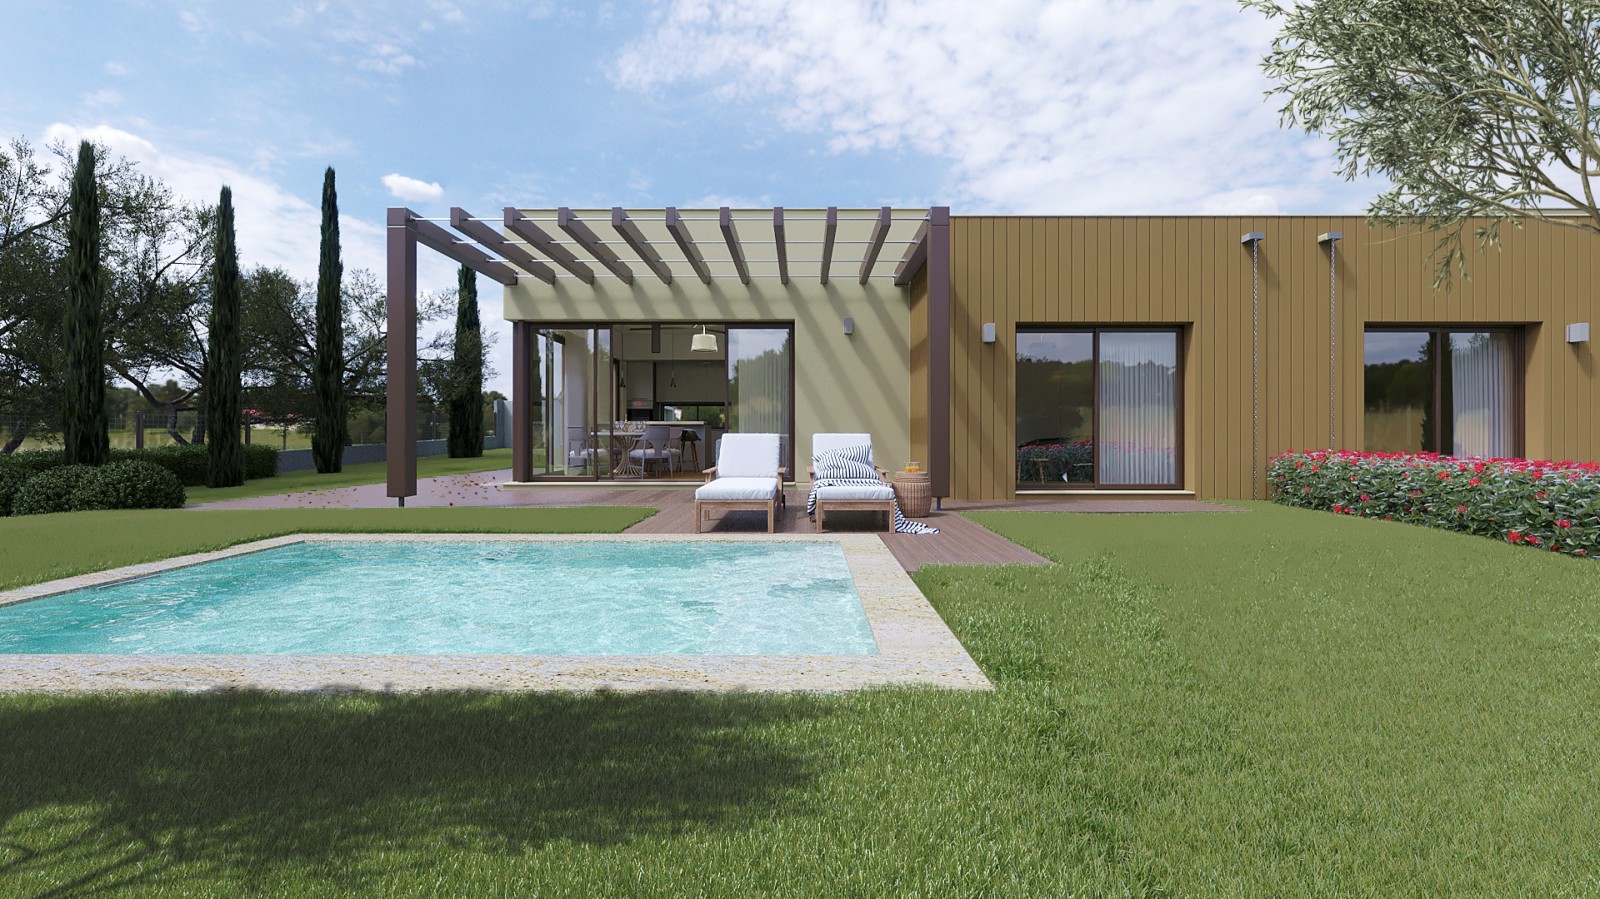 2 bedroom semi-detached villa with swimming pool for sale in Golf resort, Algarve_218831